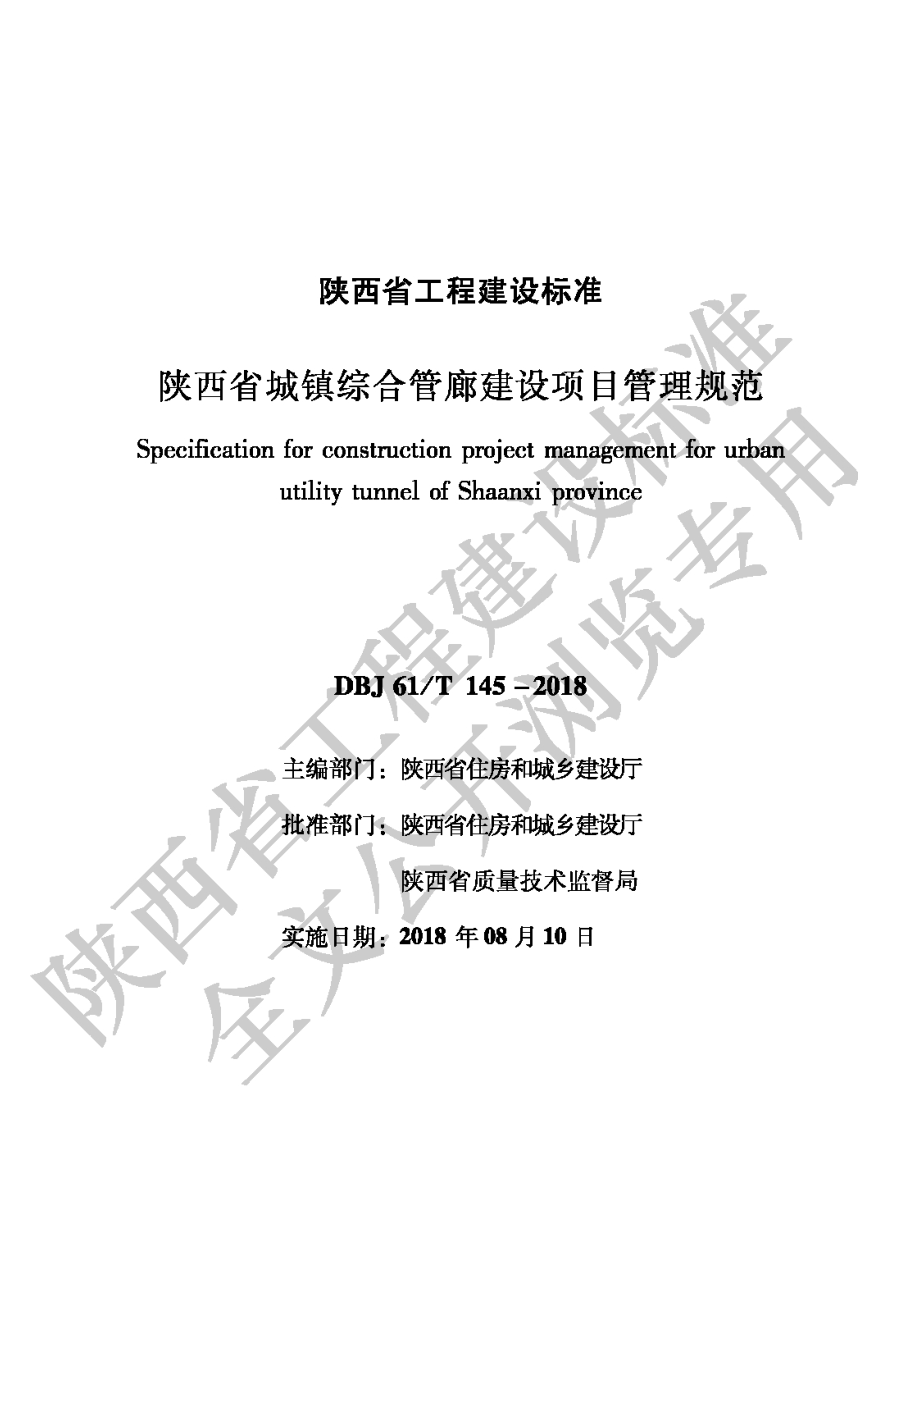 DBJ61_T 145-2018 陕西省城镇综合管廊建设项目管理规范（高清版）_第1页